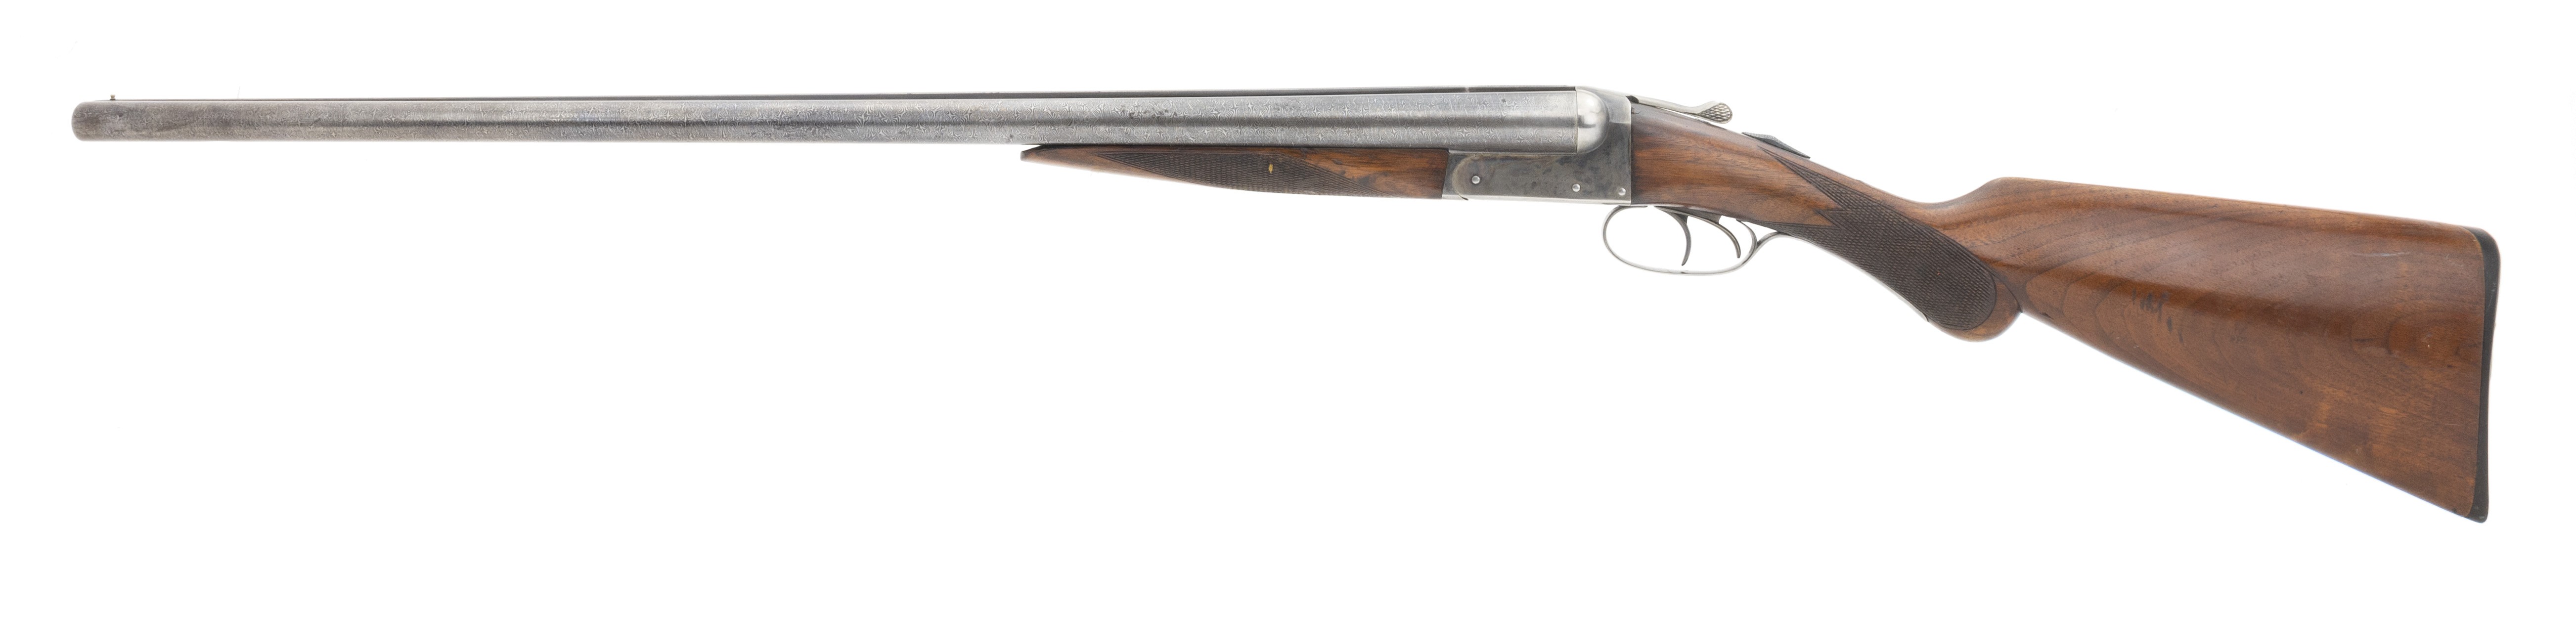 REMINGTON Model 1900 SXS SHOTGUN 12G Ilion NY HAMMERLESS KD Double